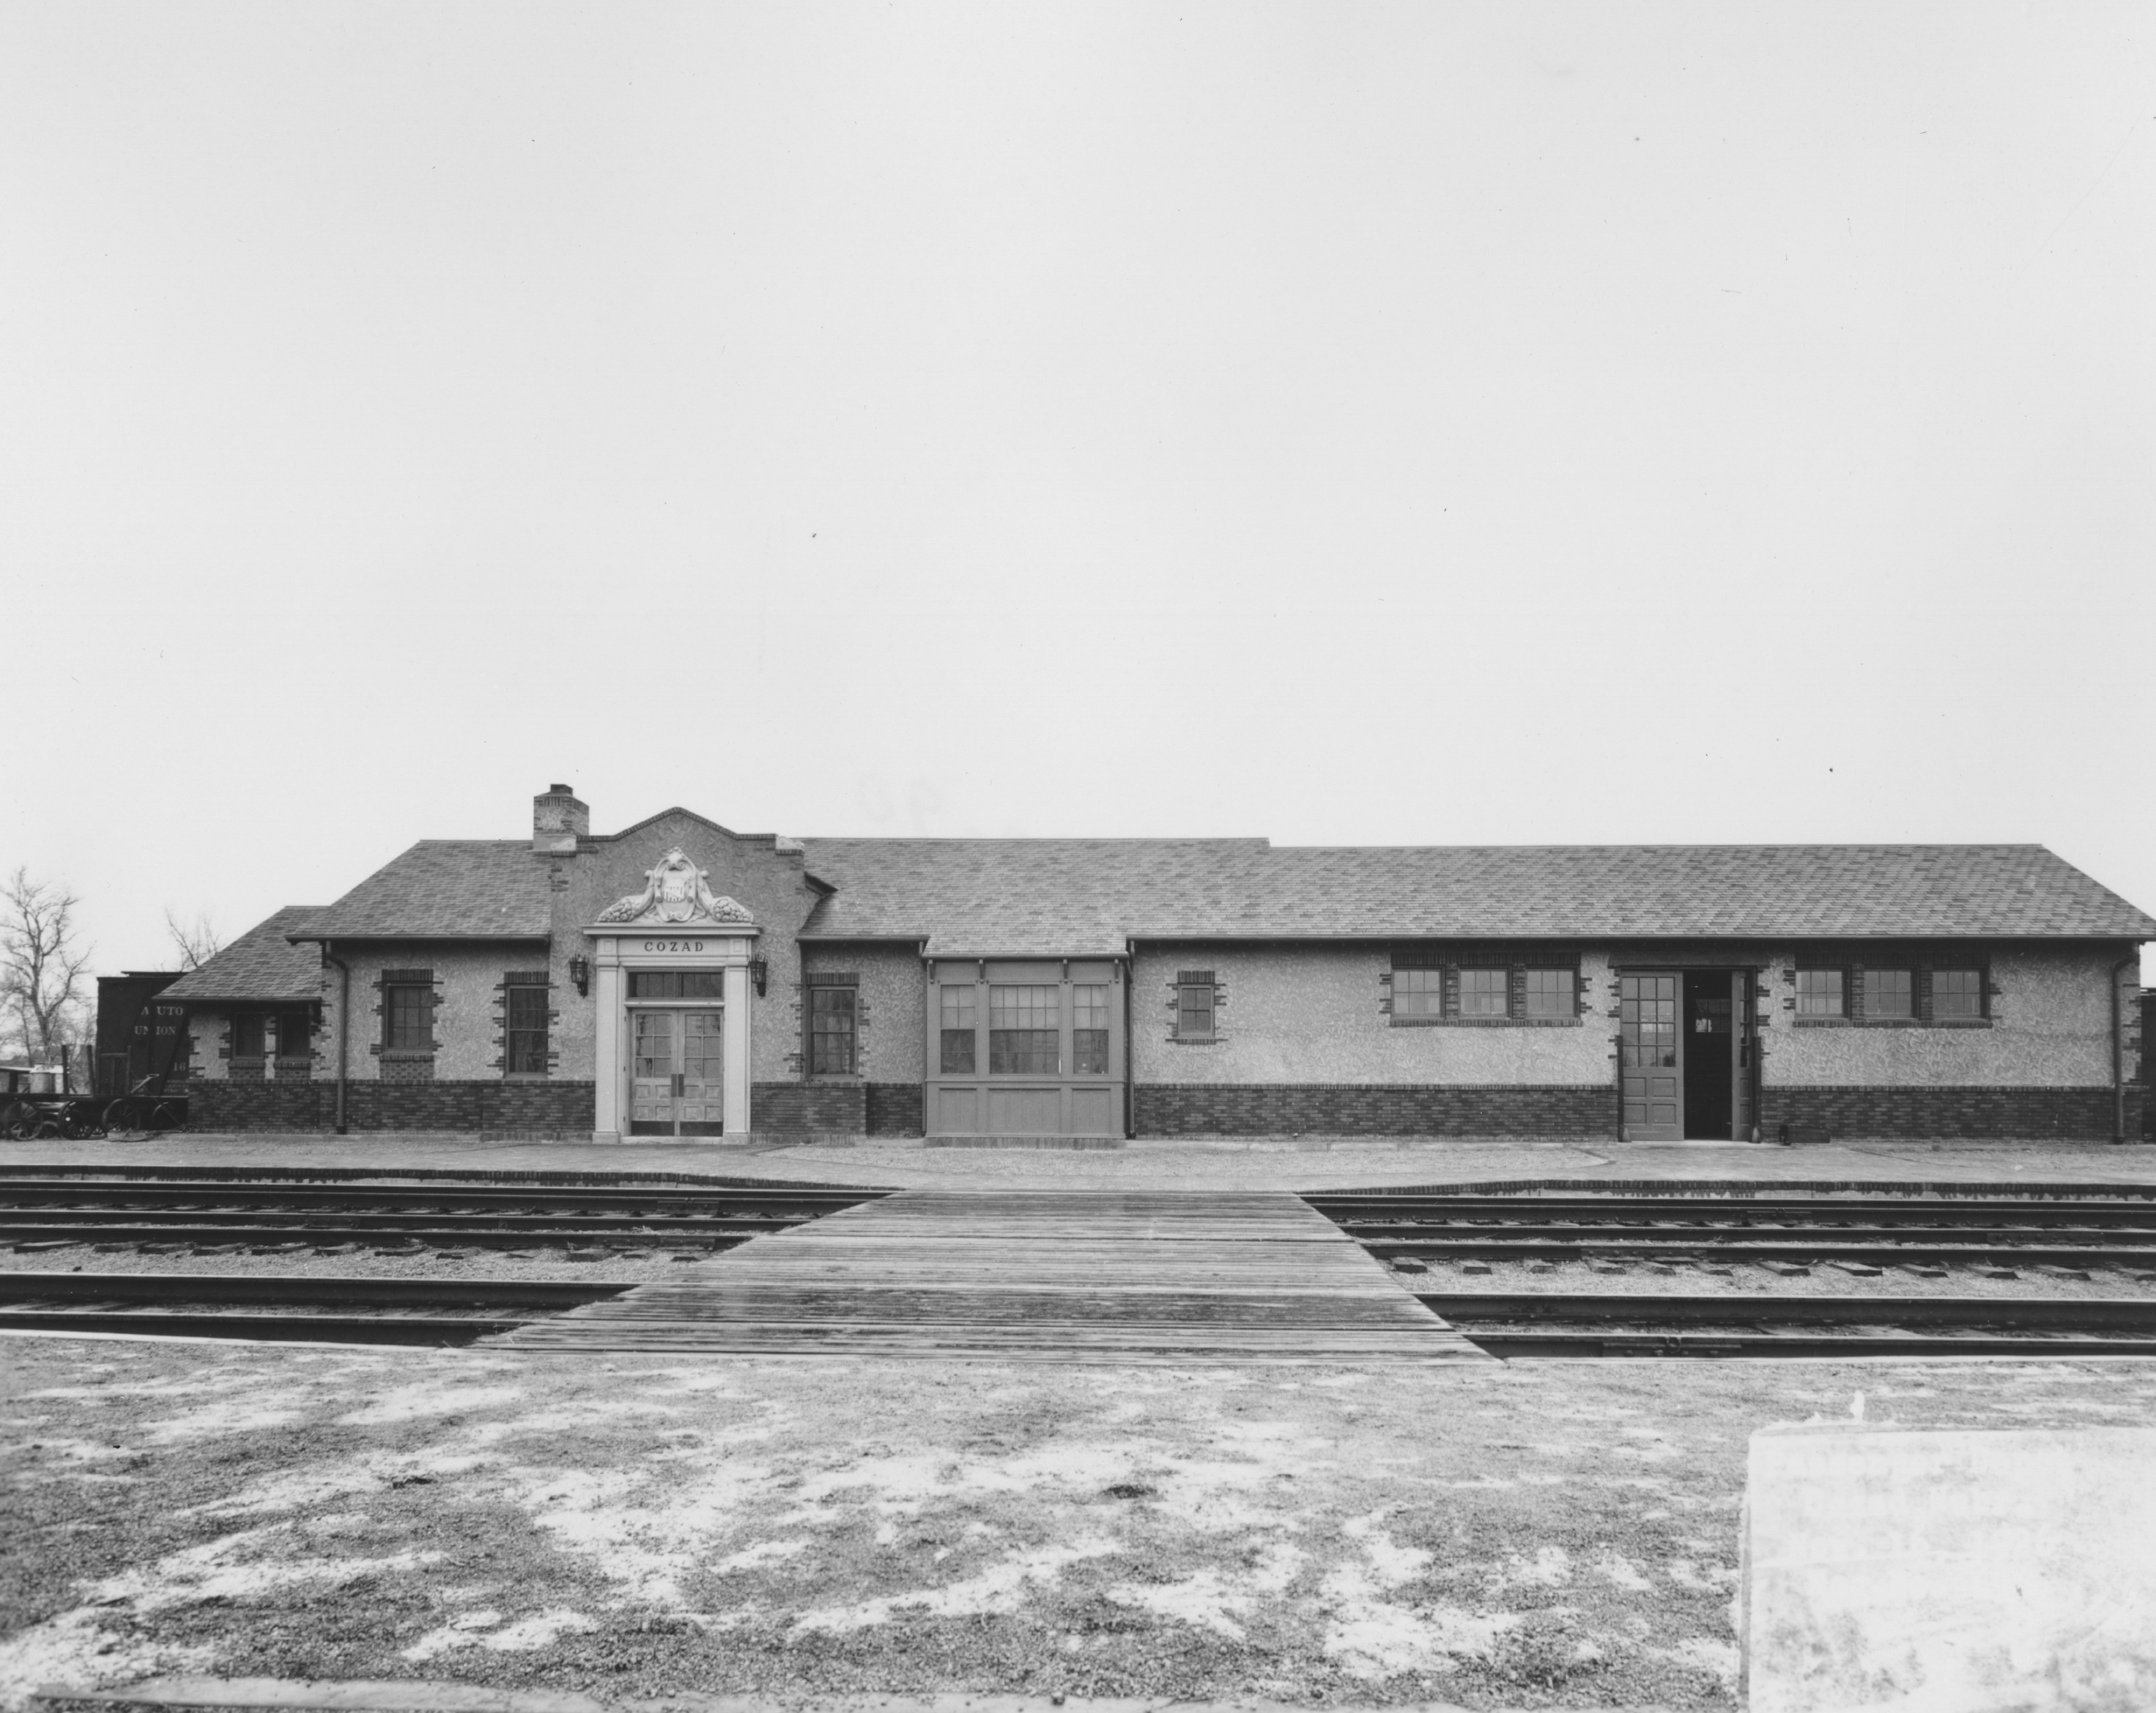 Photograph of the train station in Cozad, Nebraska, c1926